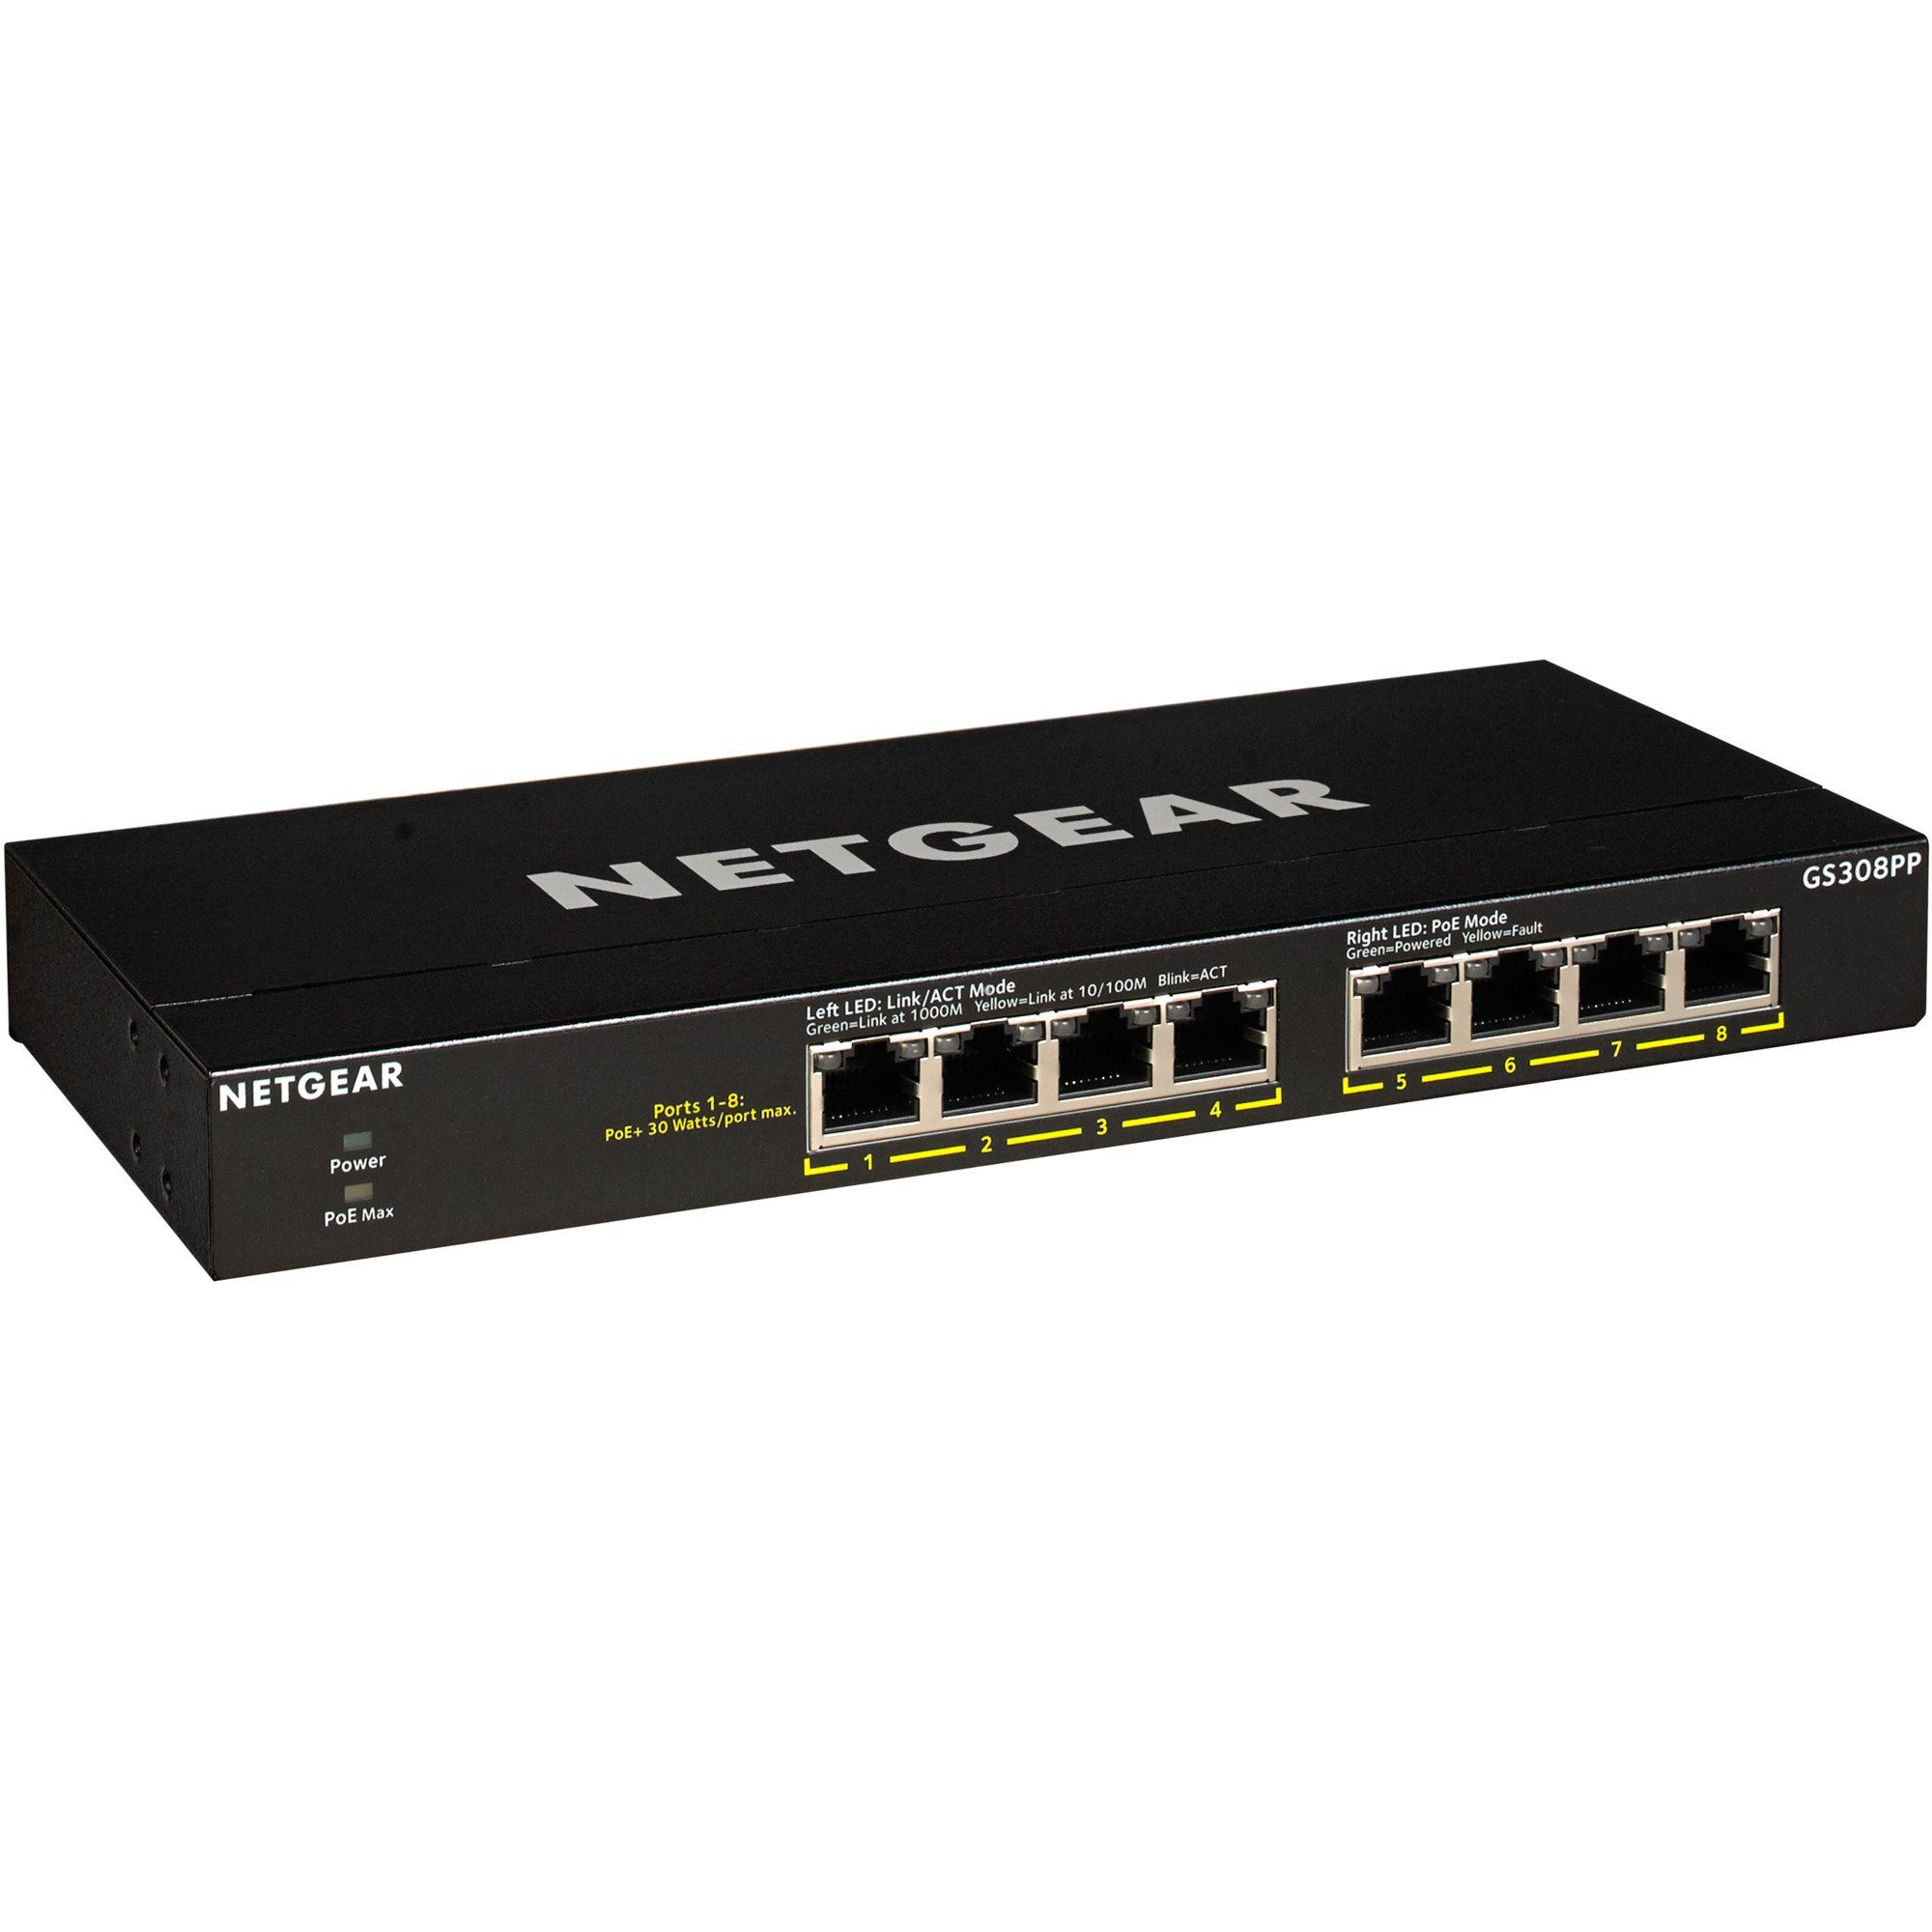 NETGEAR Netgear GS308PP, Switch Netzwerk-Switch